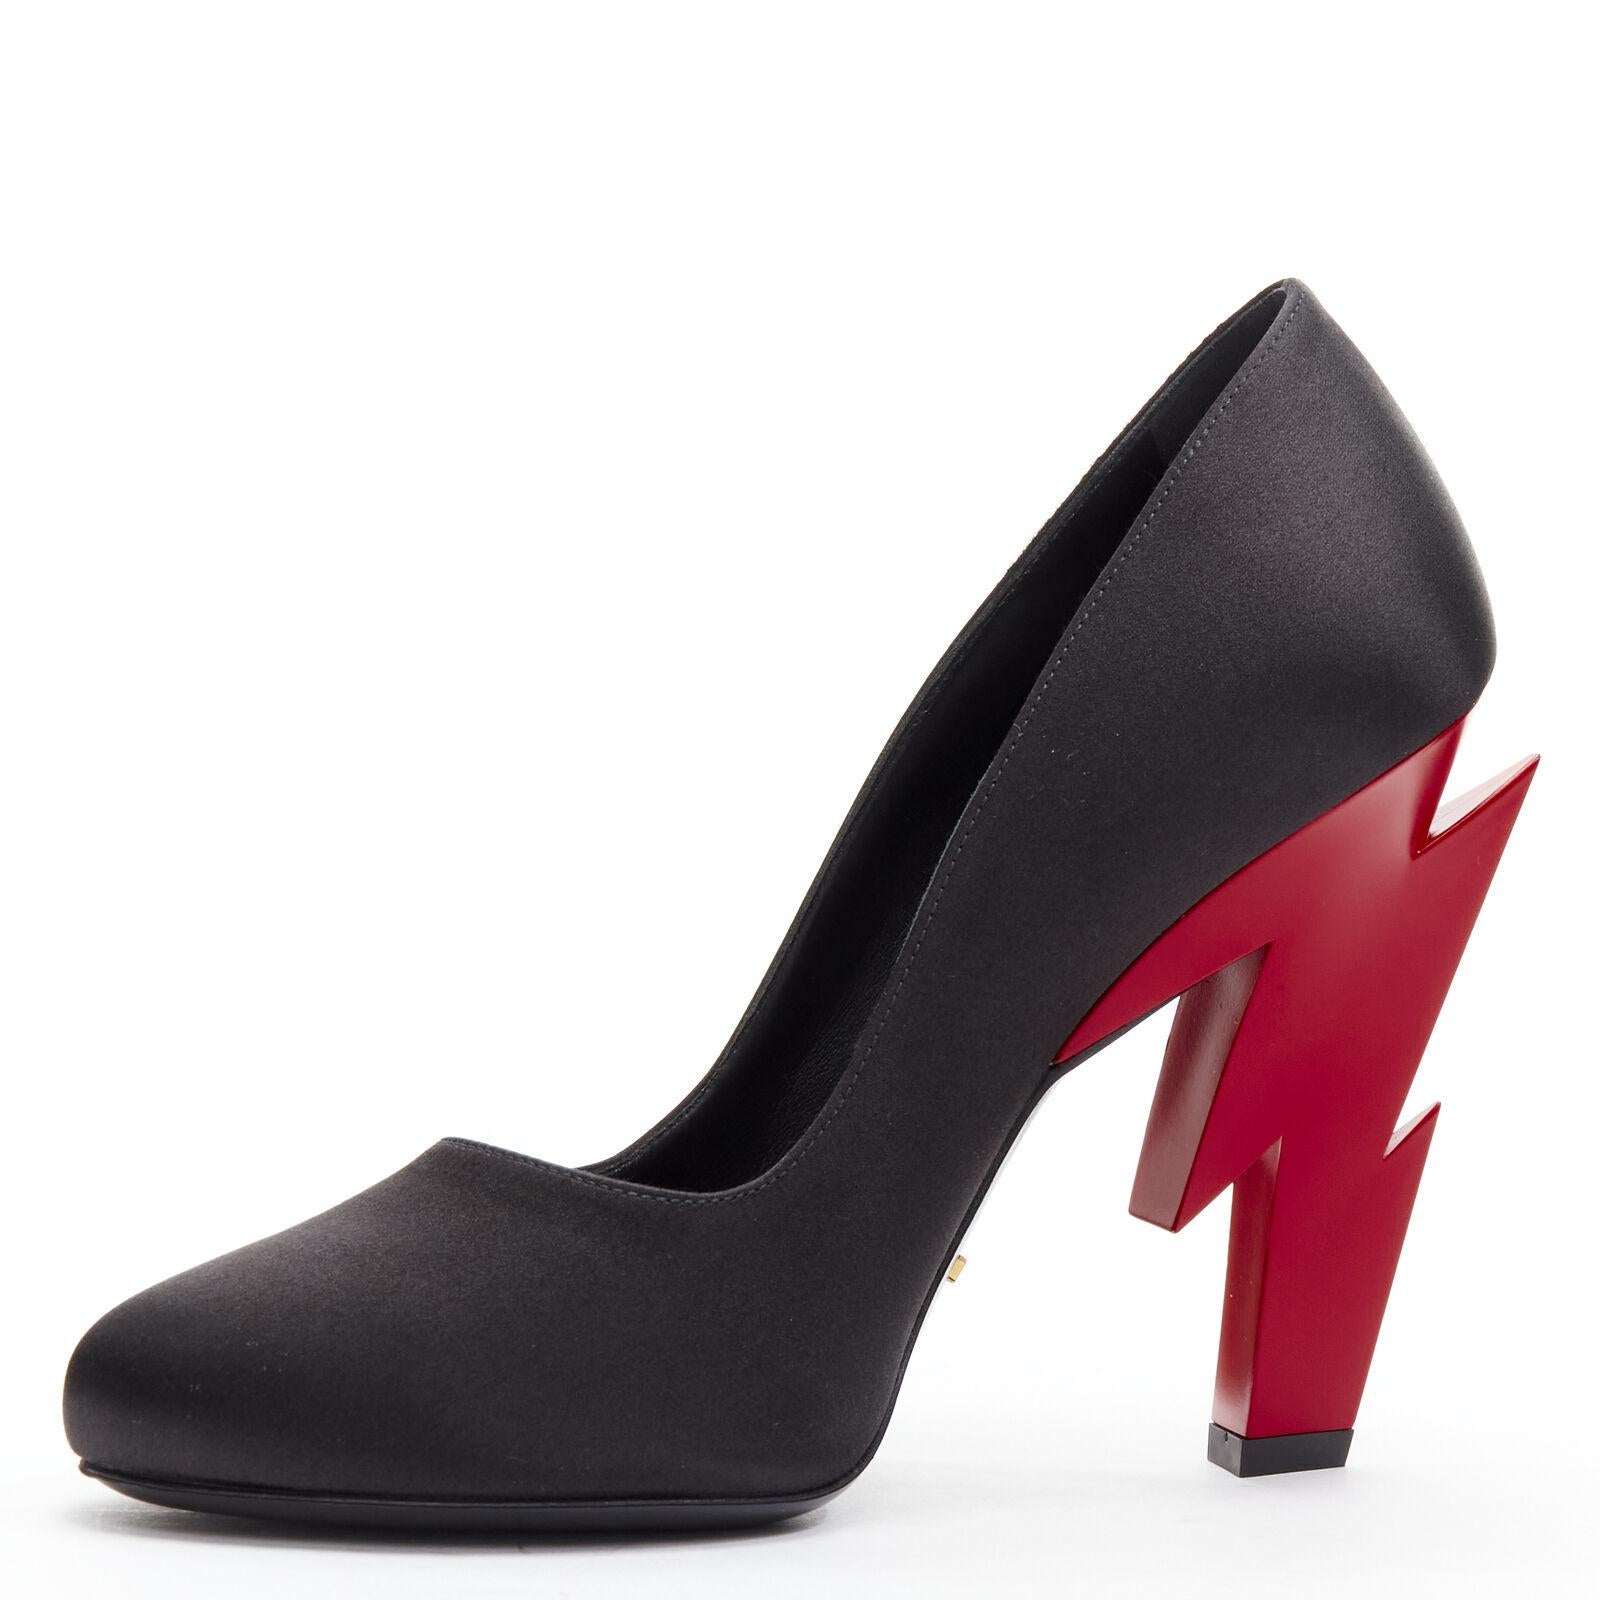 red silk heels